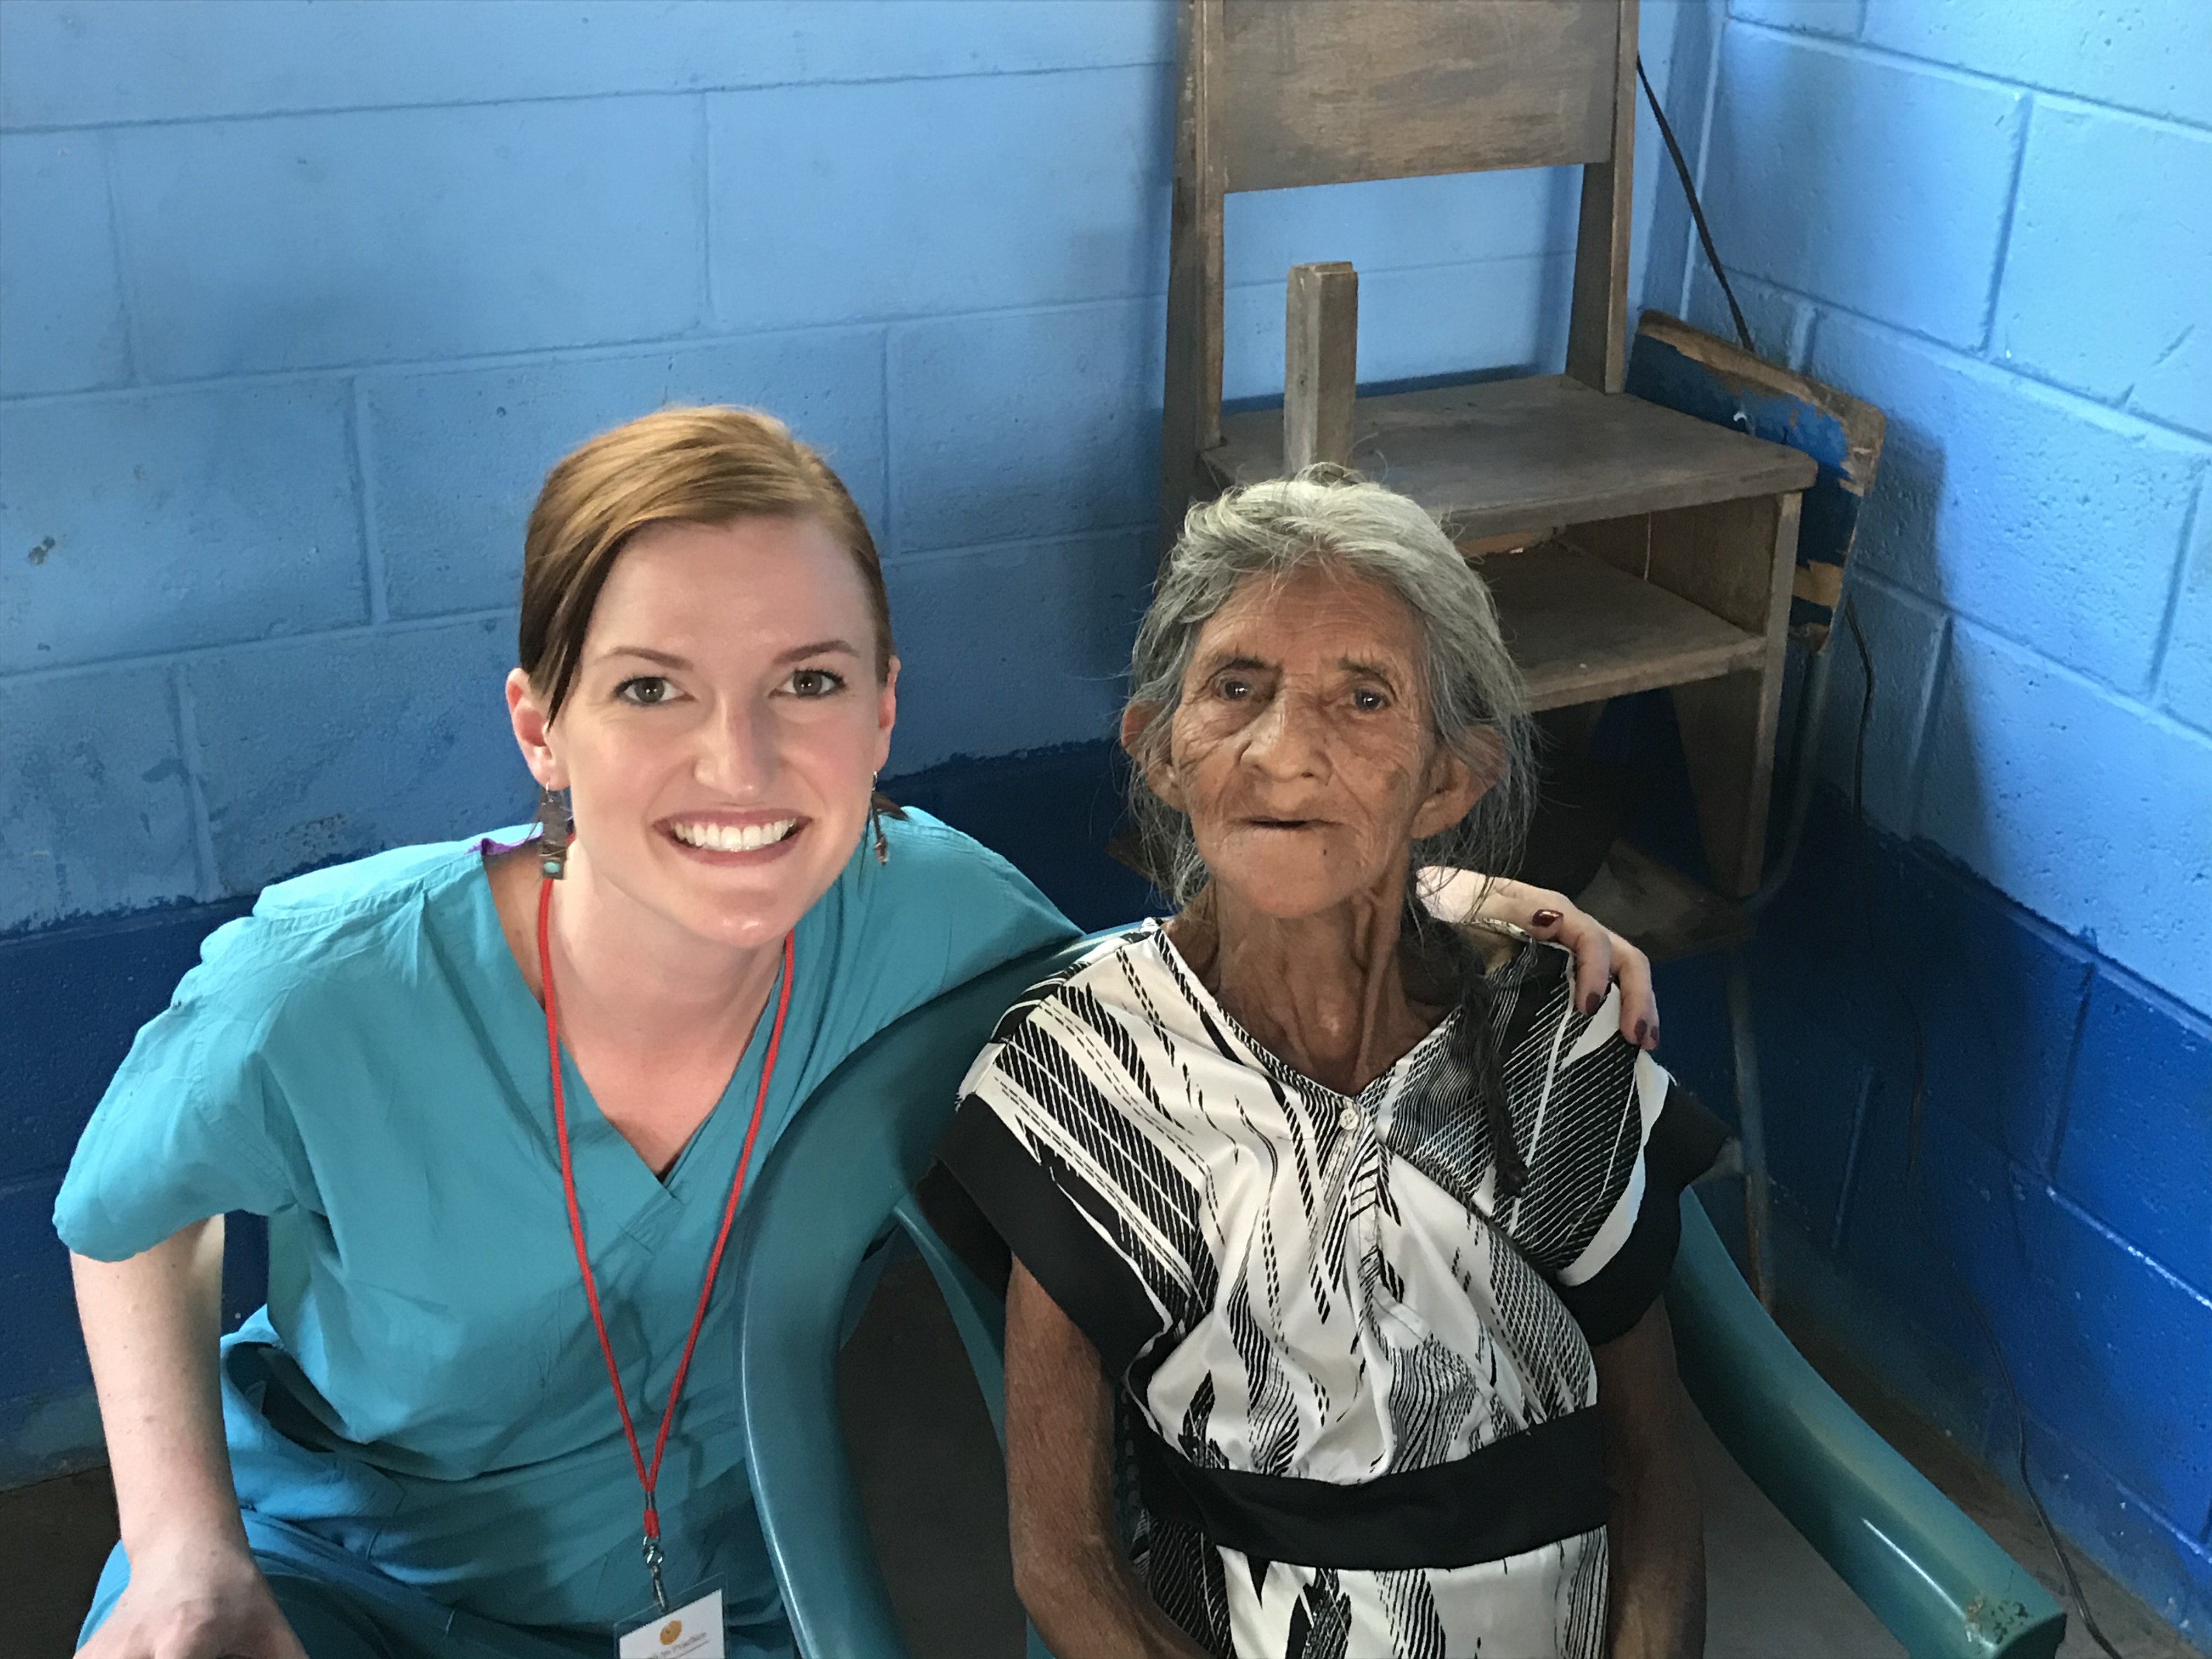 Dr. Galloway volunteering in Guatemala